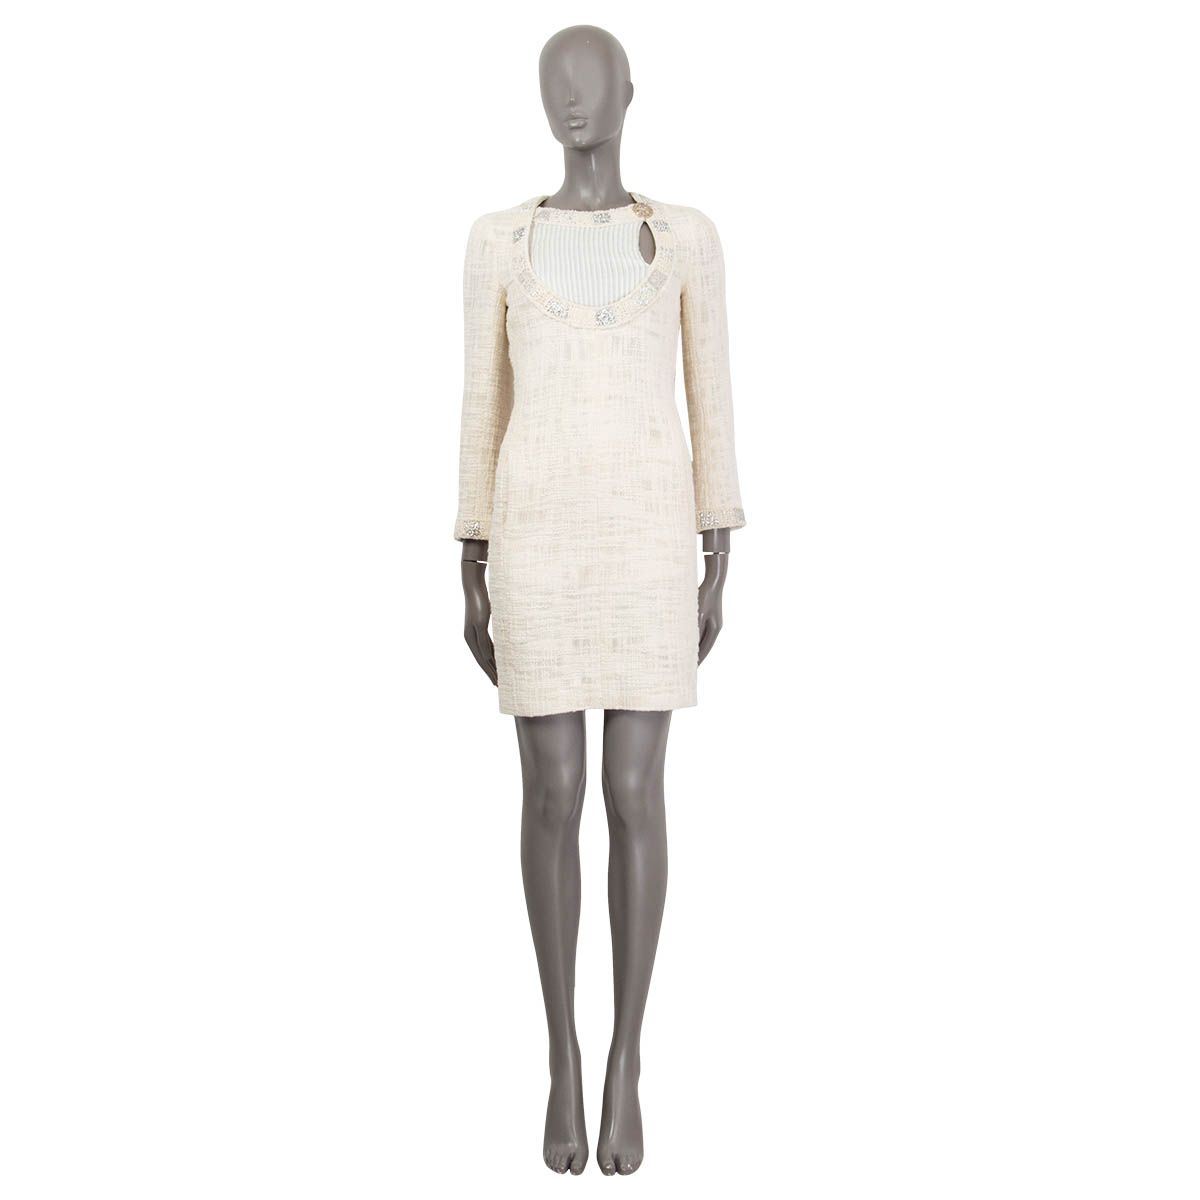 Chanel 2012 12A Bombay Tweed Dress Ivory Cotton Sarah Jessica Parker